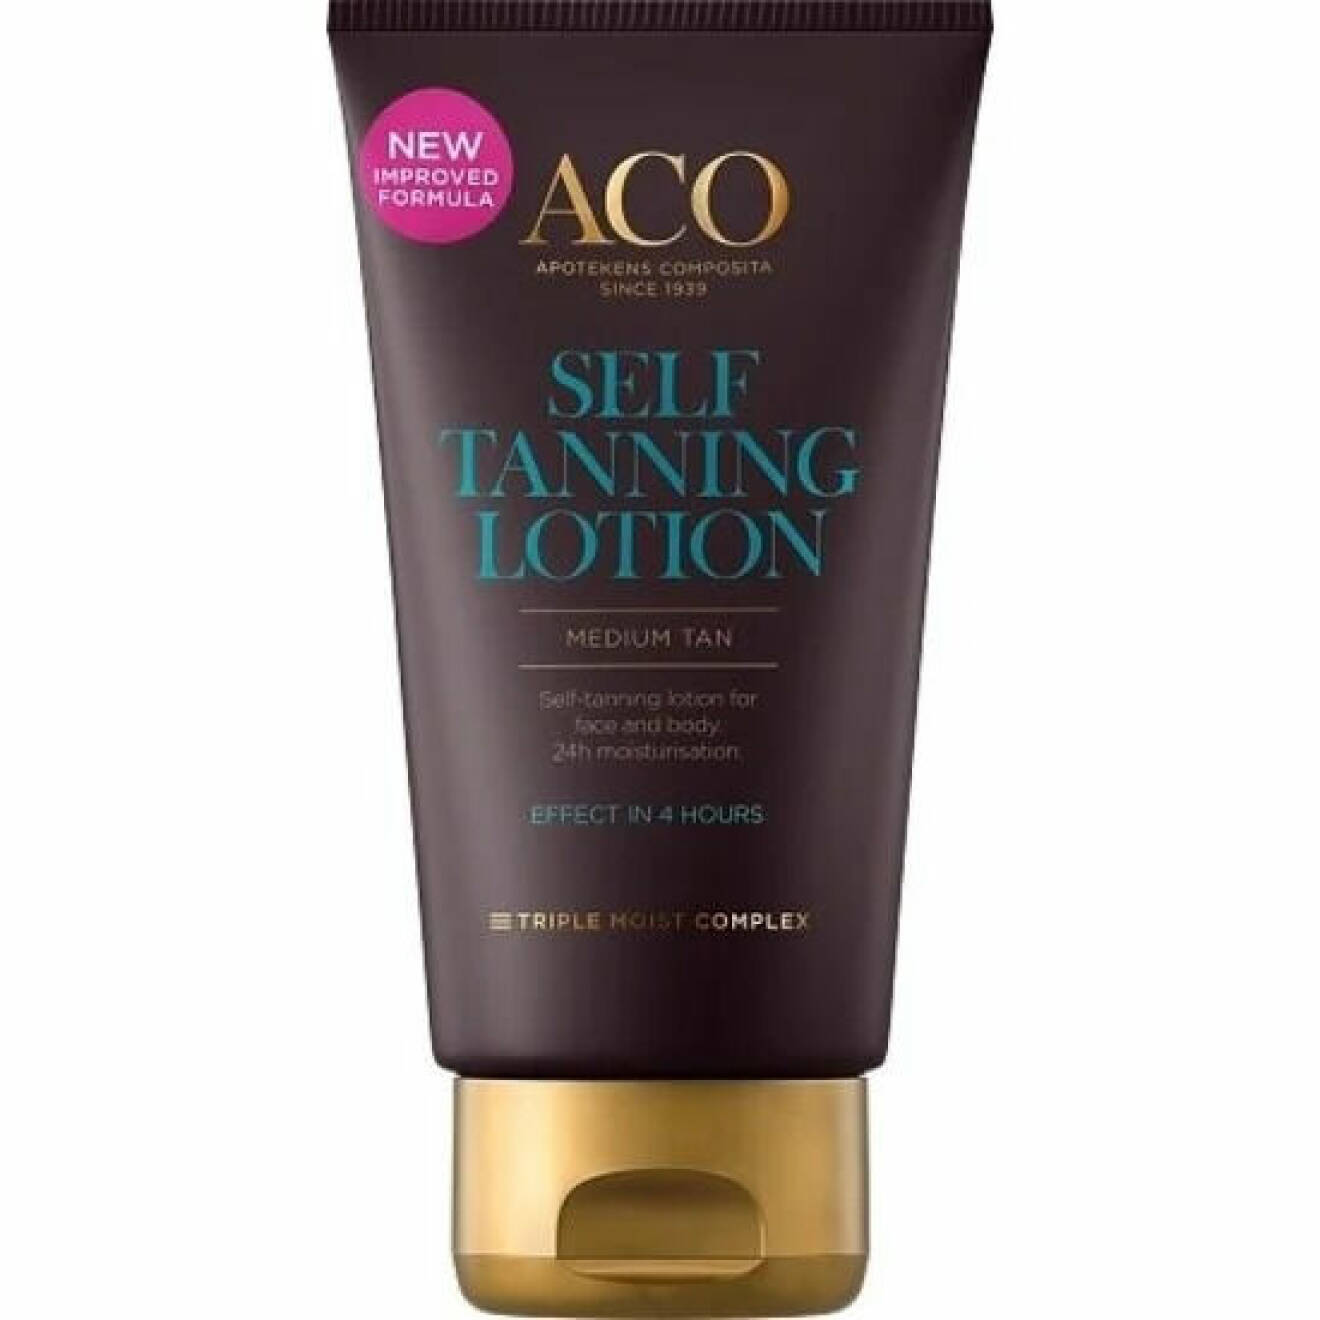 aco self tanning lotion